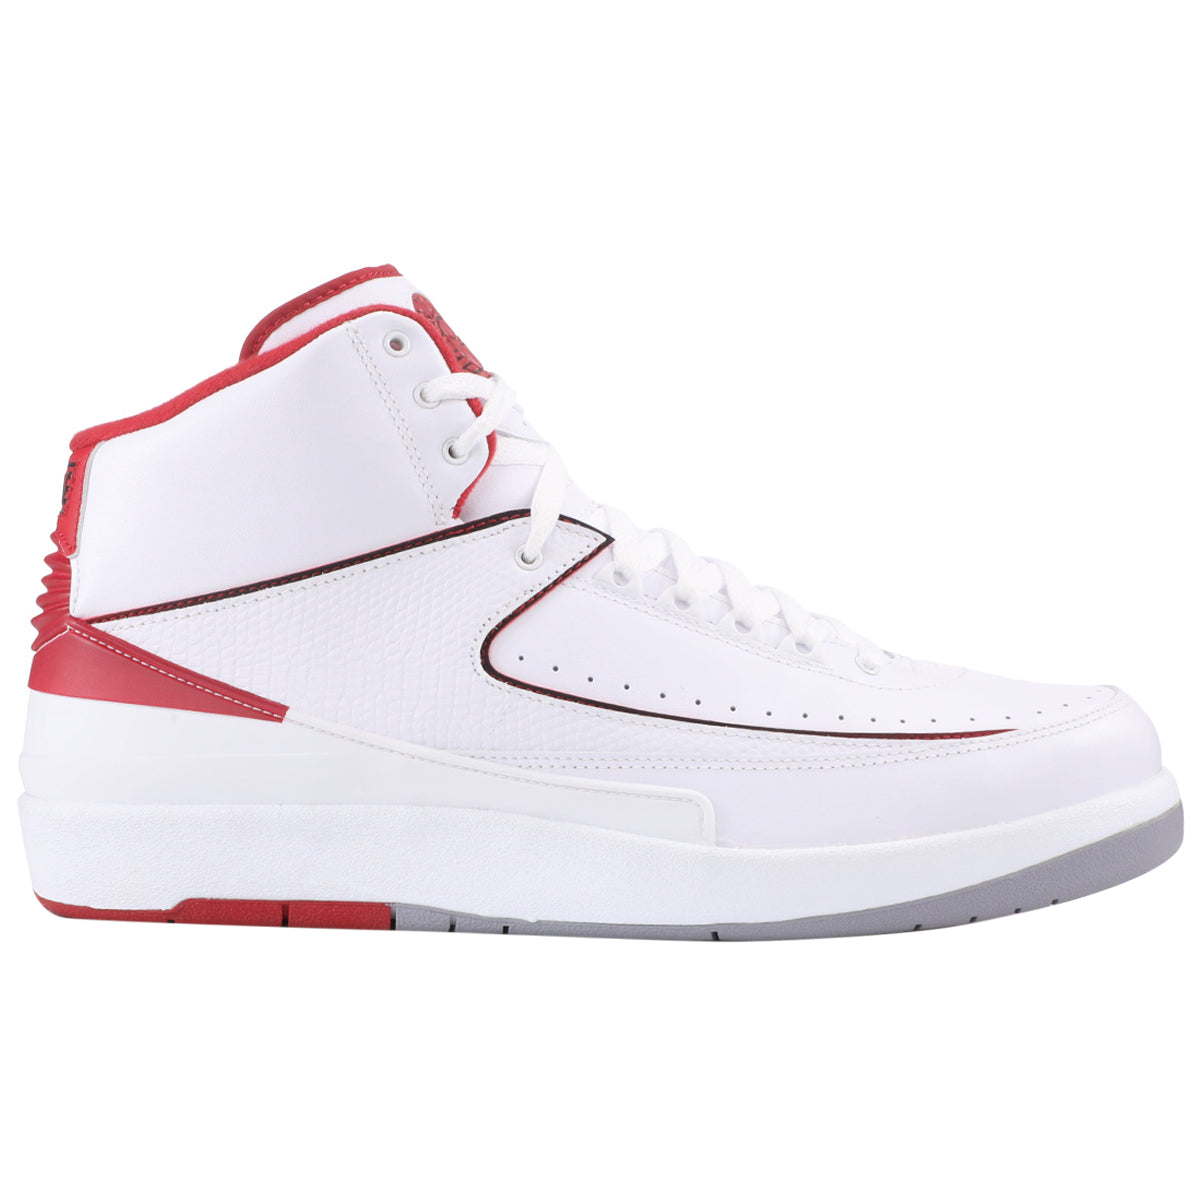 Air Jordan 2 Retro Basketball Shoes Men's Style 385475-102